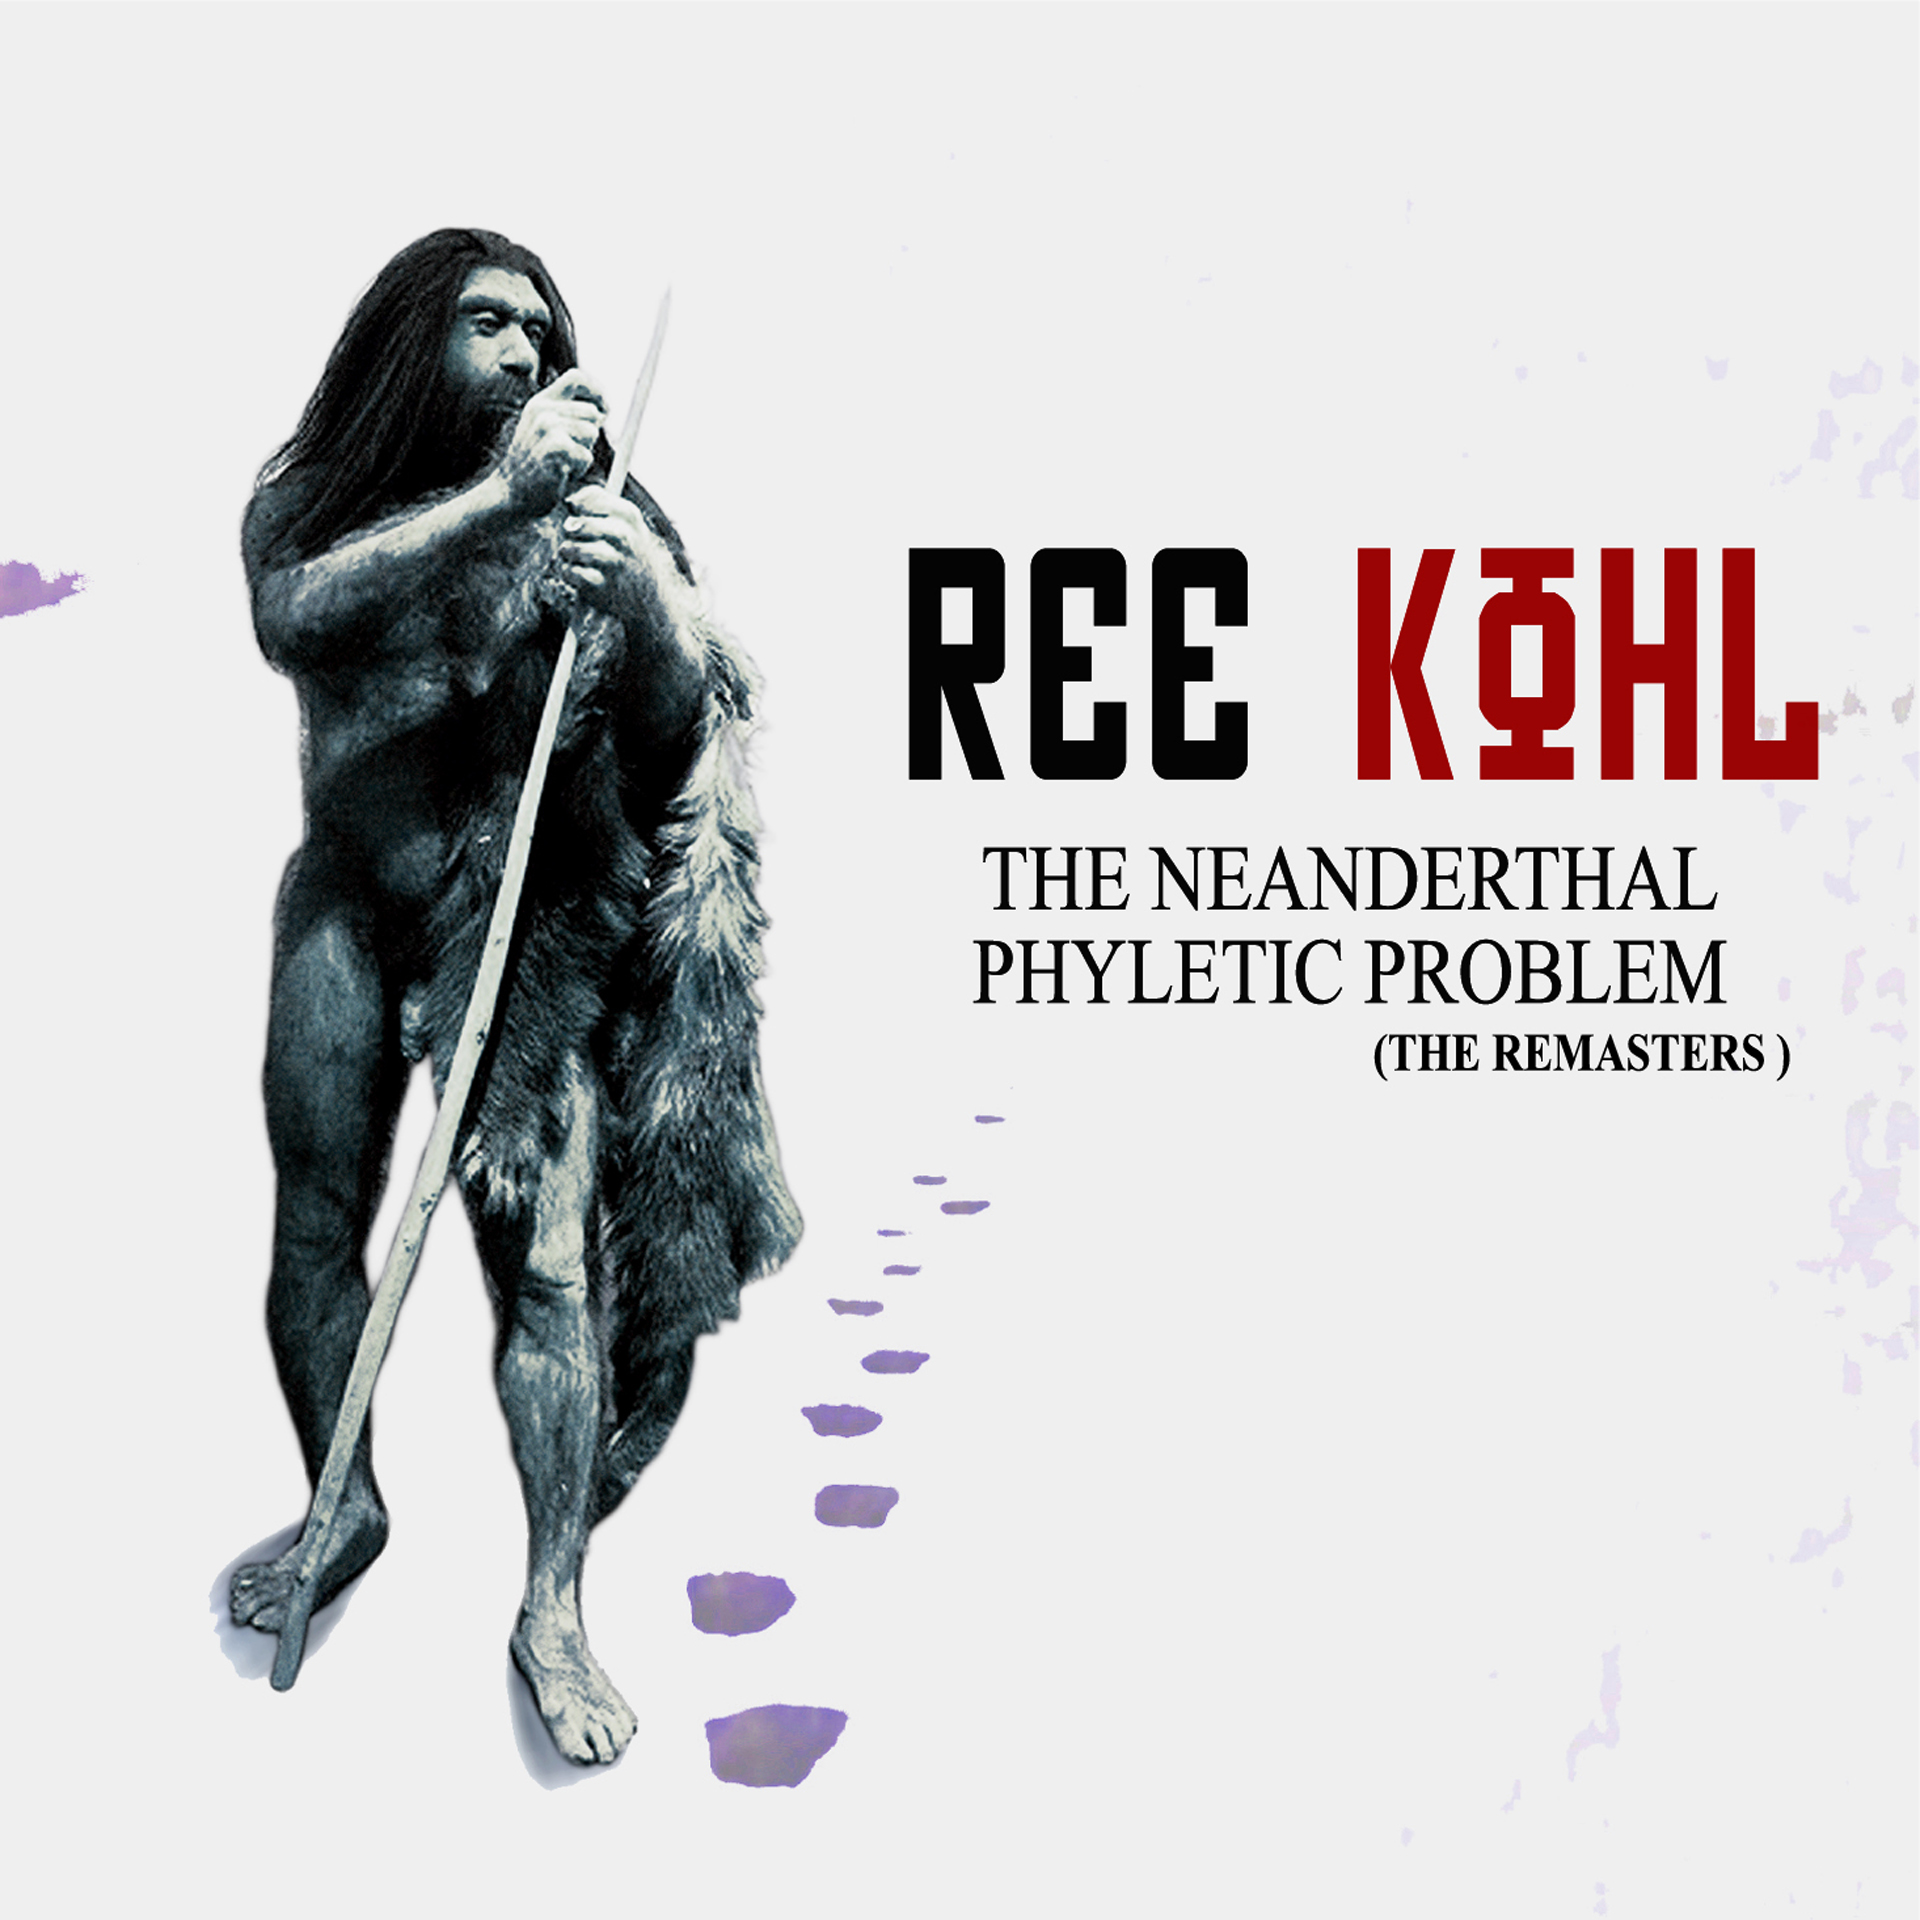 Neanderthal Ph. Pr. - Popular 1 | Ree Kohl